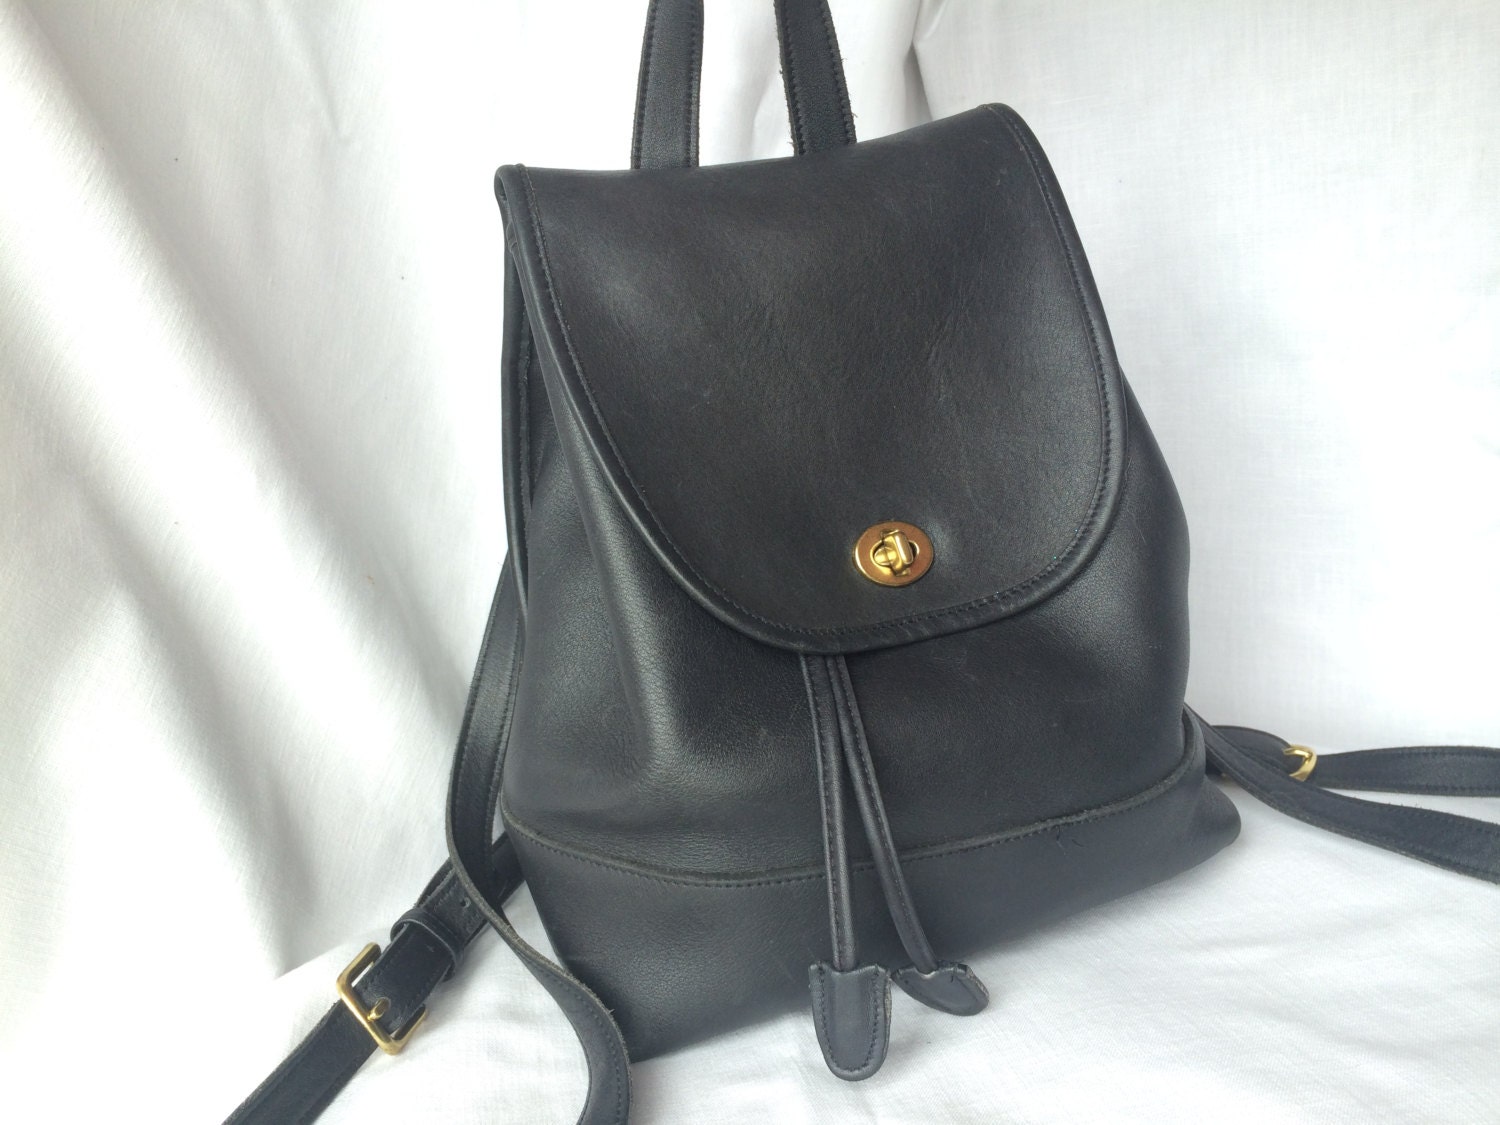 Vintage Coach Backpack Tote Bag in Black Leather